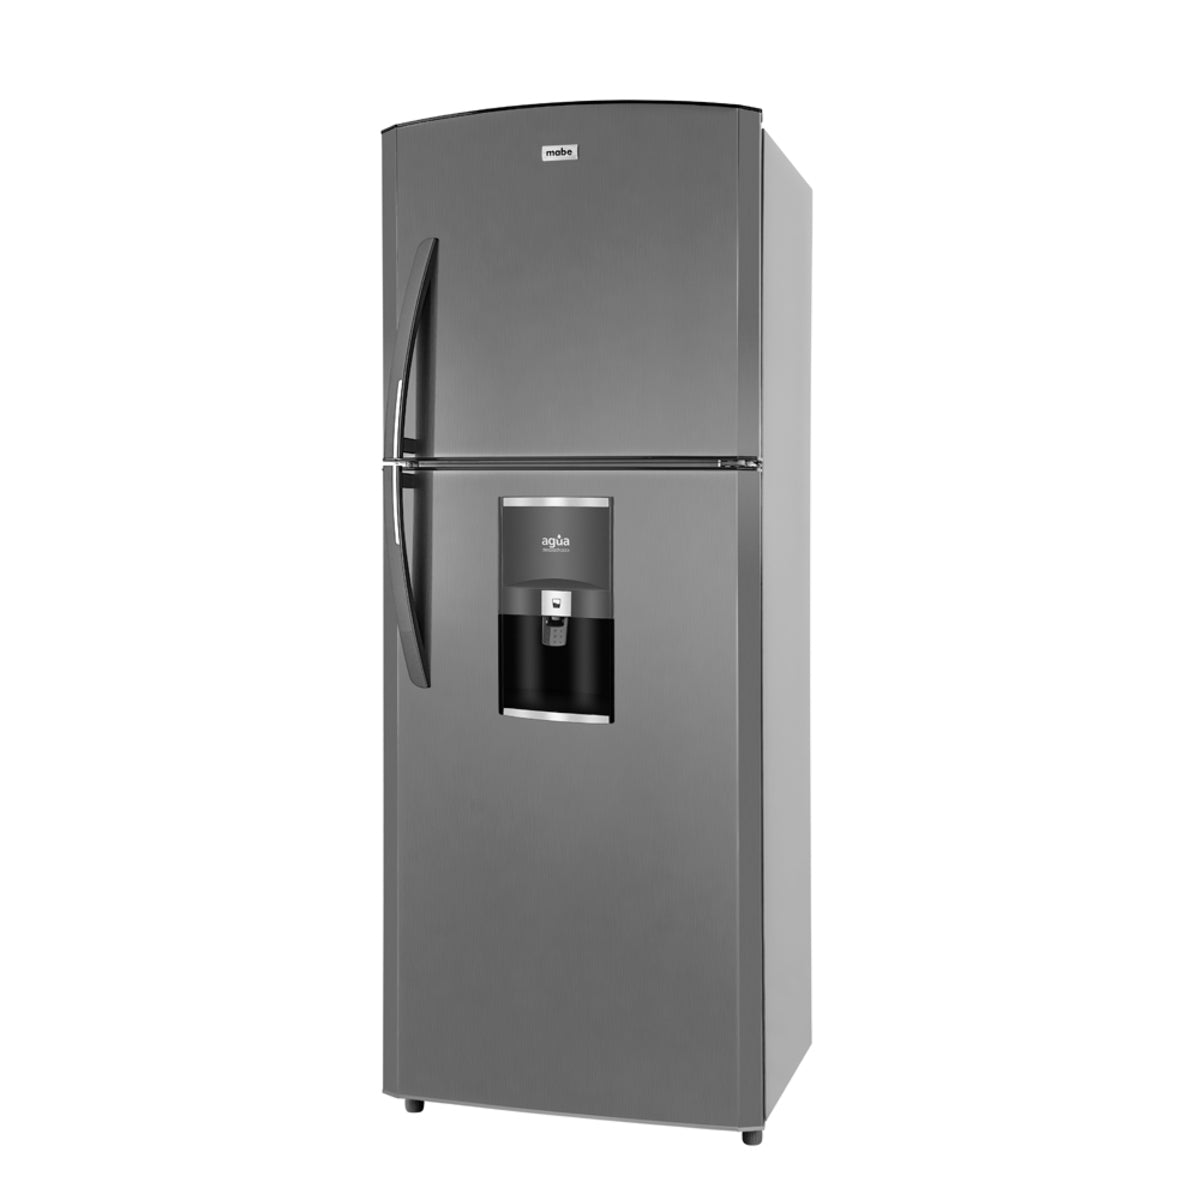 Refrigerador Automático 360 L (14 pies) Grafito Mabe - RME1436YMXE0